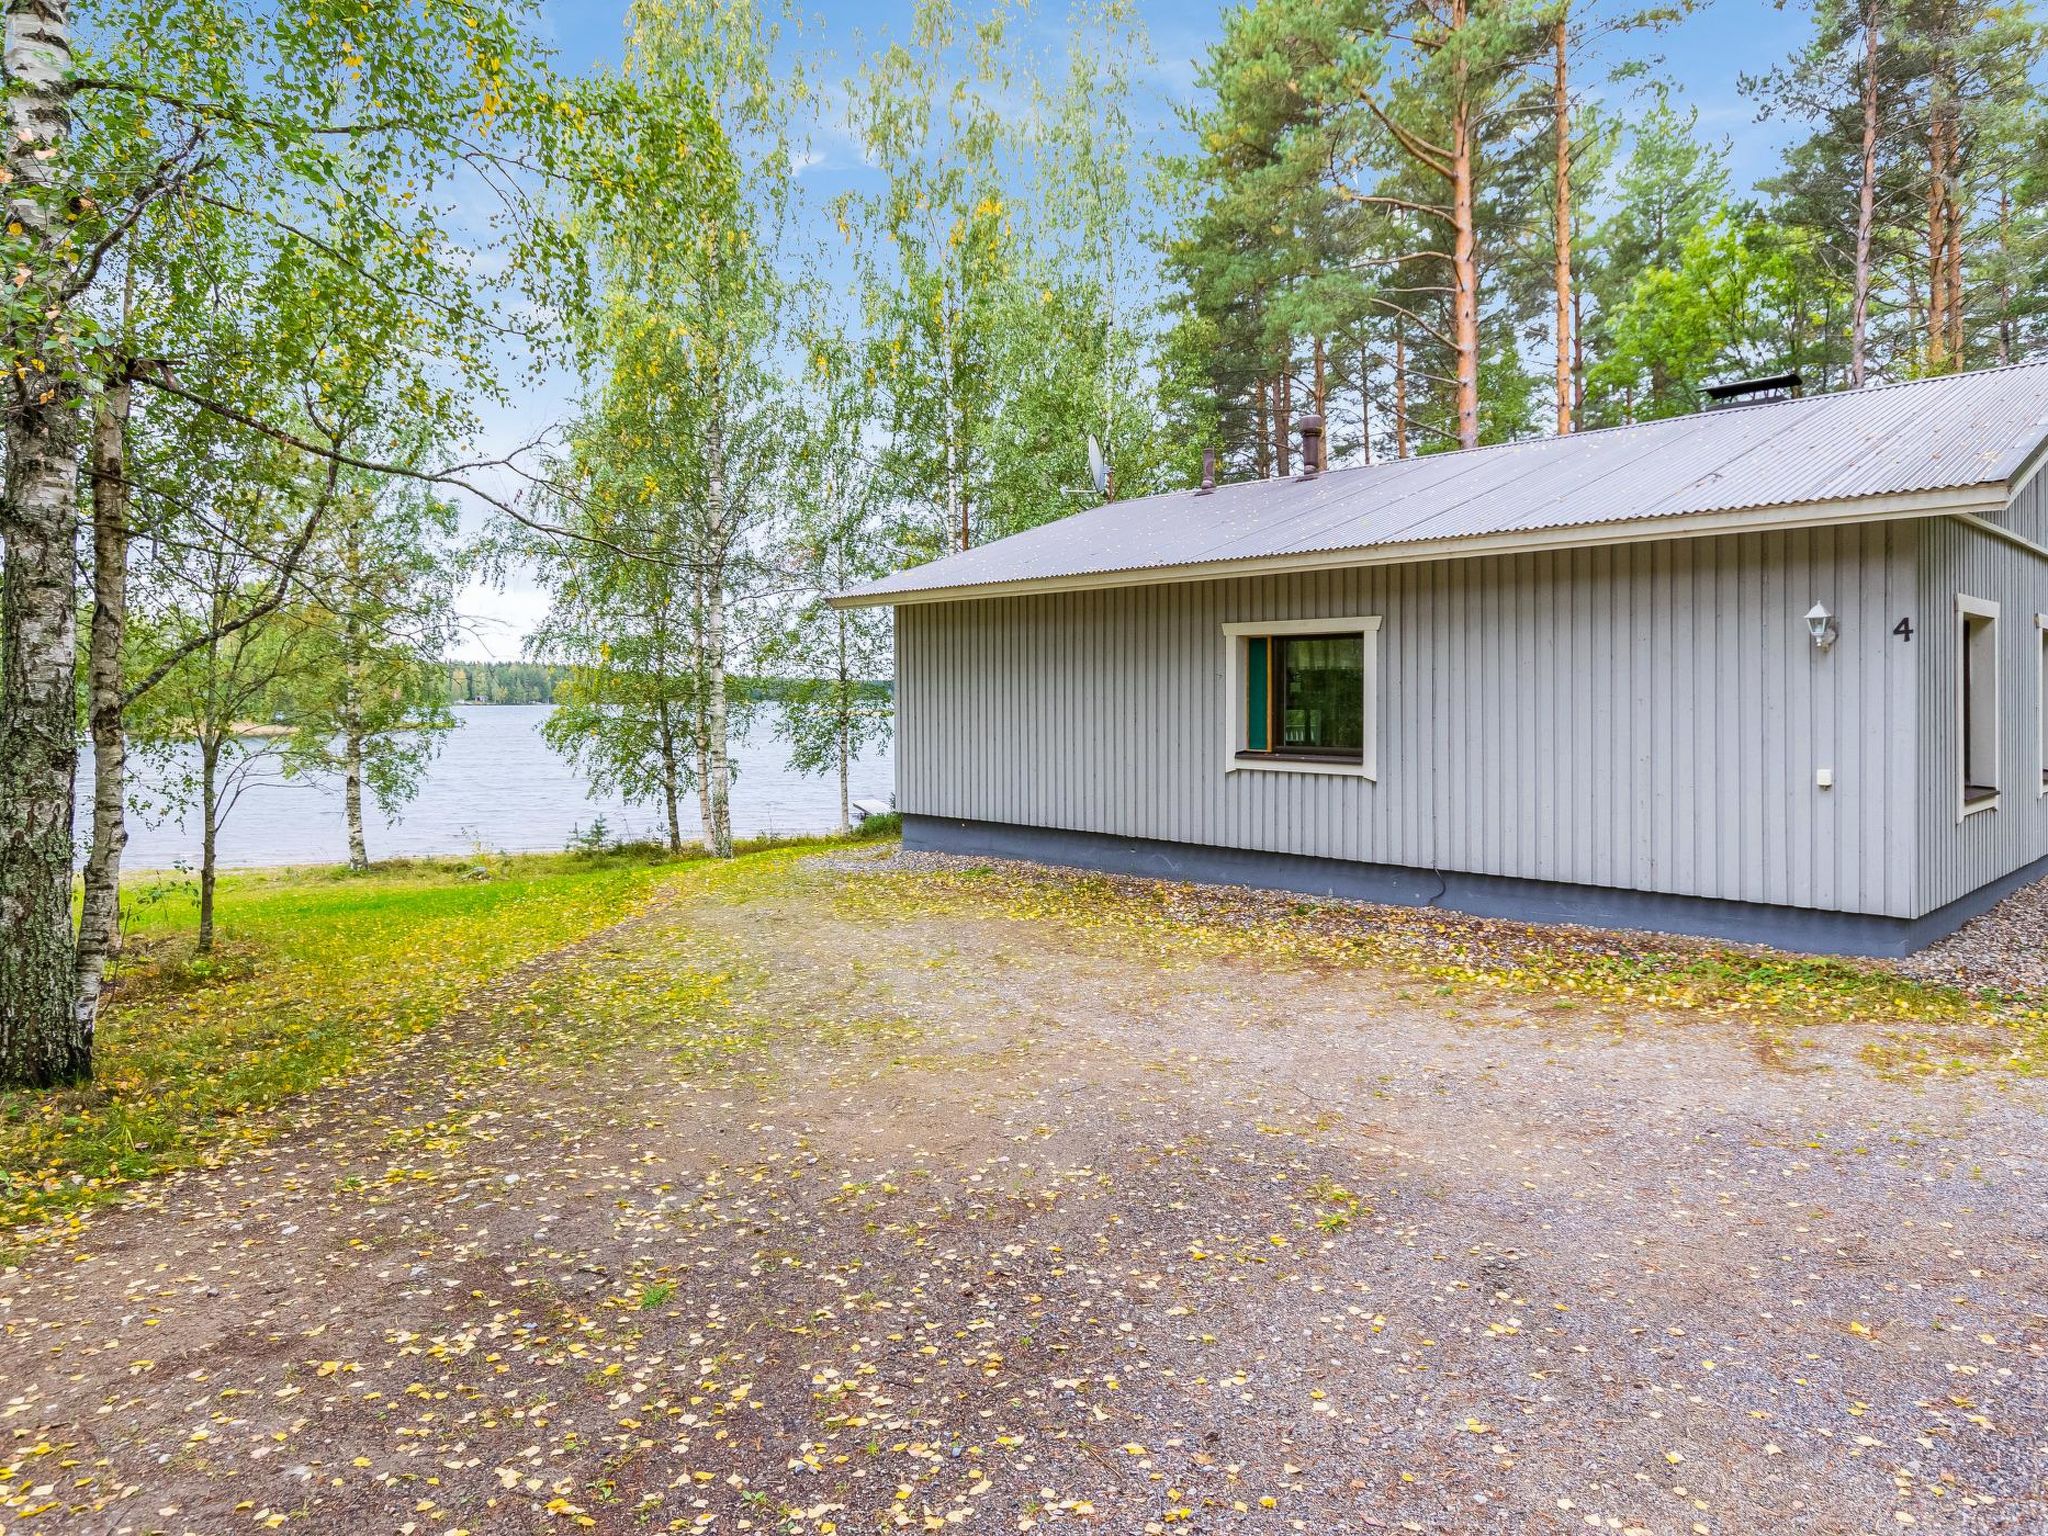 Photo 3 - 2 bedroom House in Savonlinna with sauna